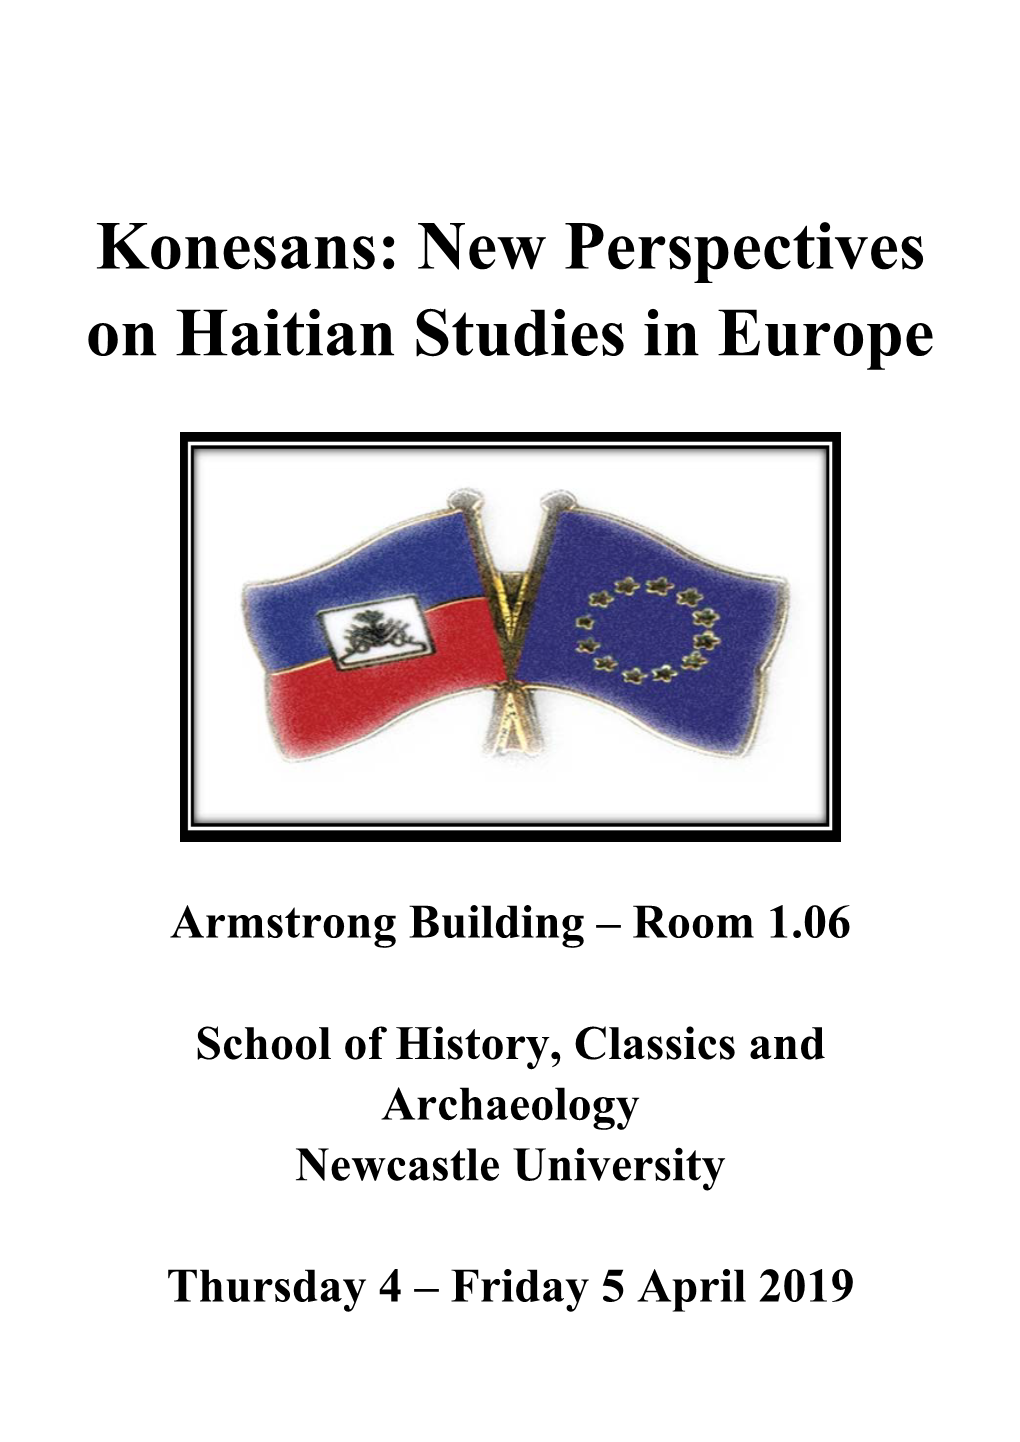 Konesans: New Perspectives on Haitian Studies in Europe